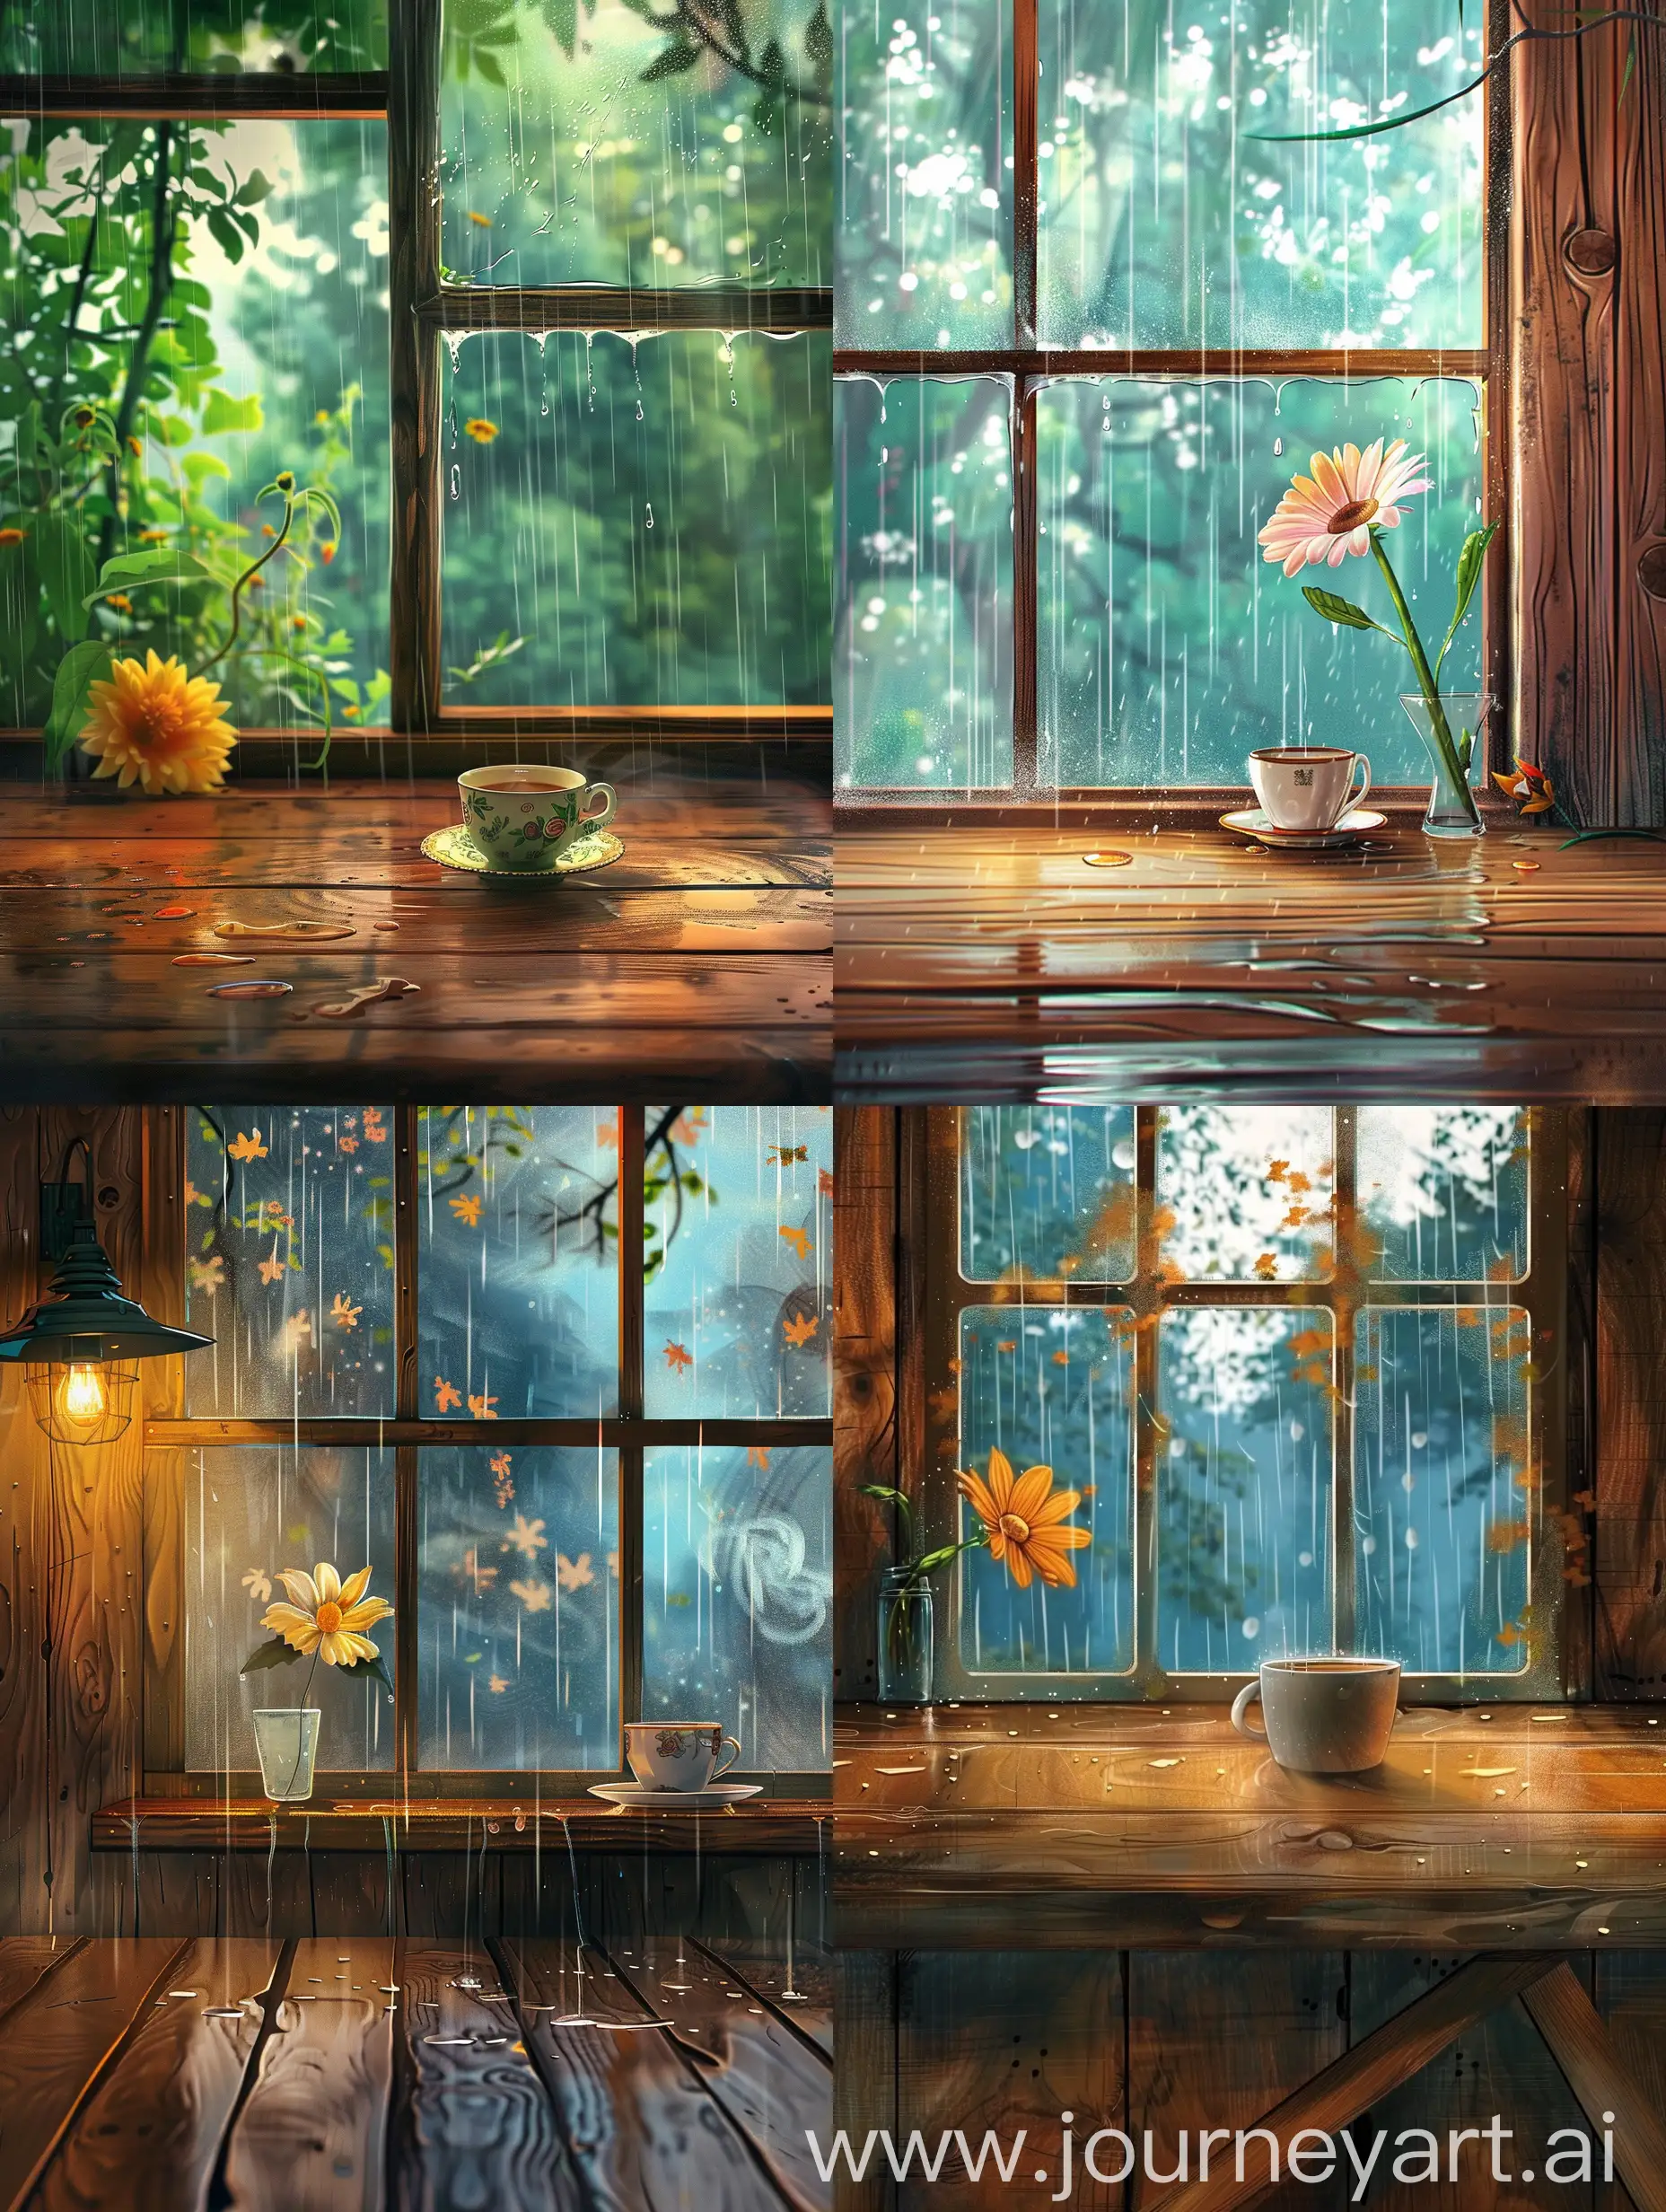 Window, wooden table, rain, flower, coffee cup, anime style.